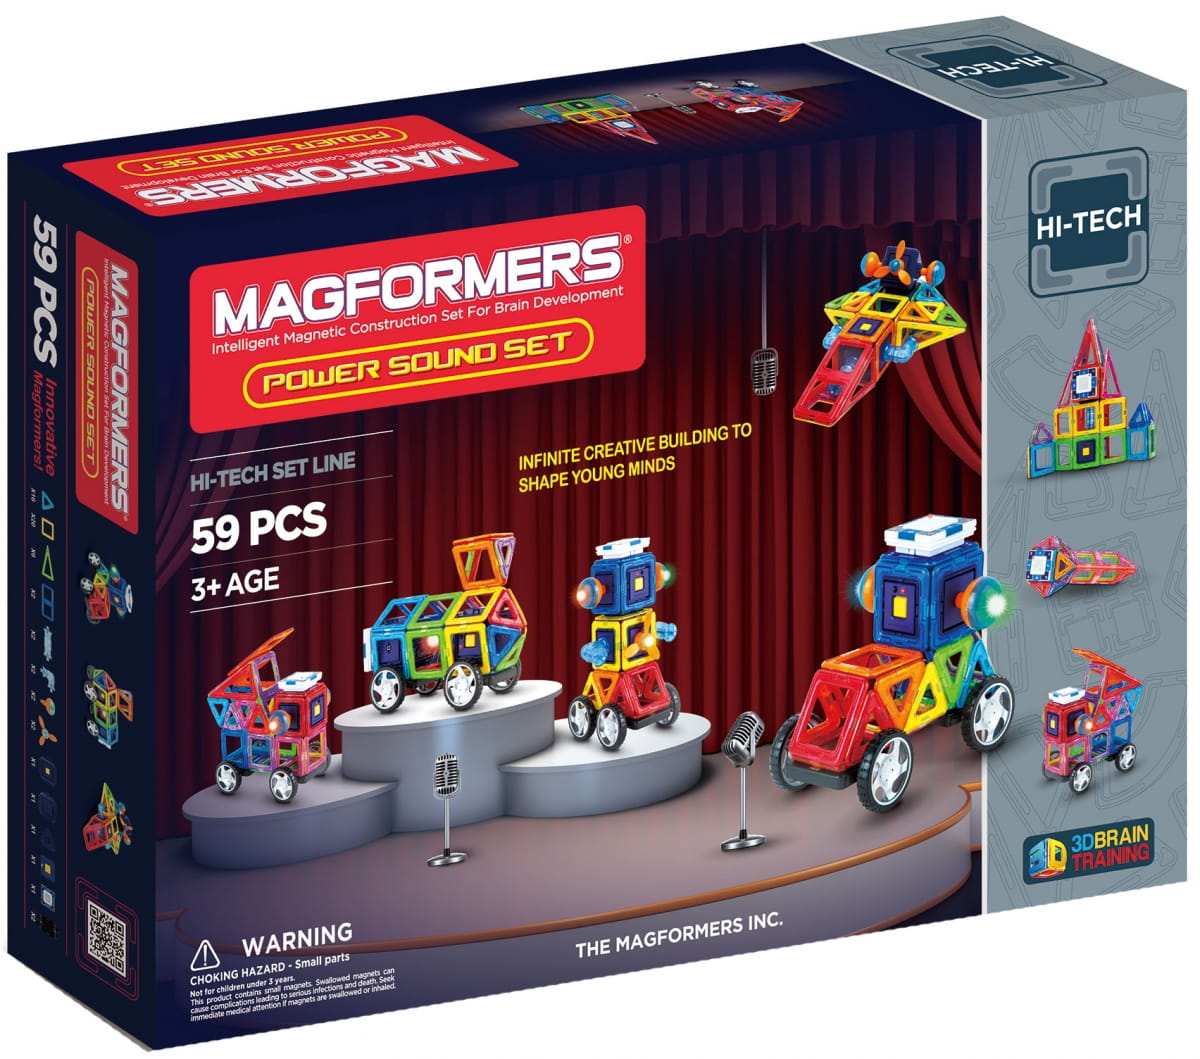    Magformers Power Sound Set (59 )